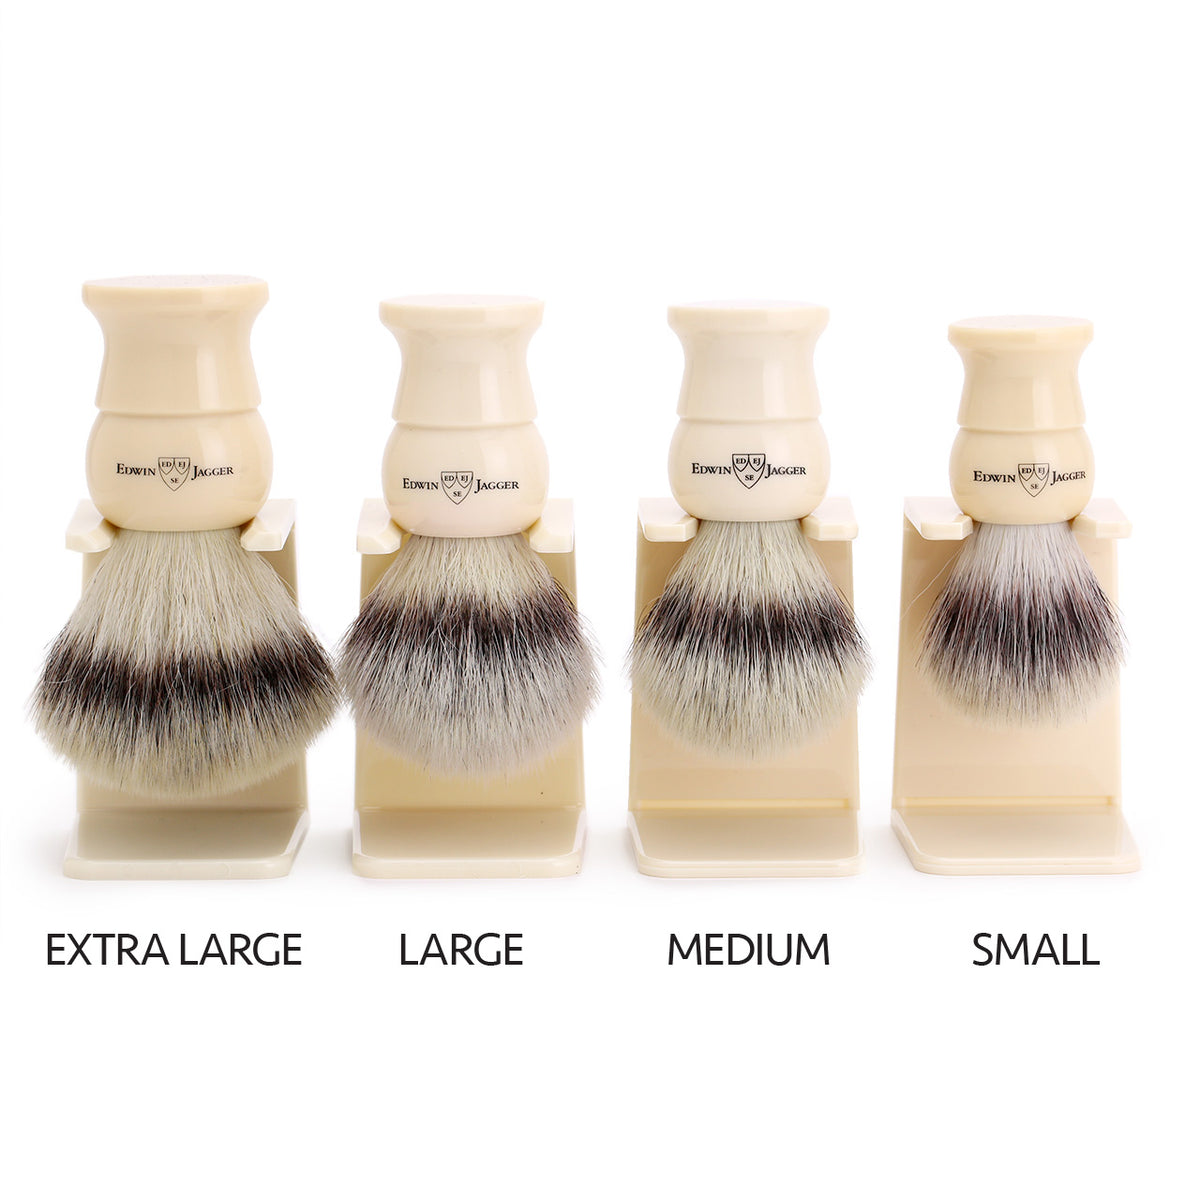 Edwin Jagger Cruelty Free Ivory shaving brushes comparison of 4 sizes